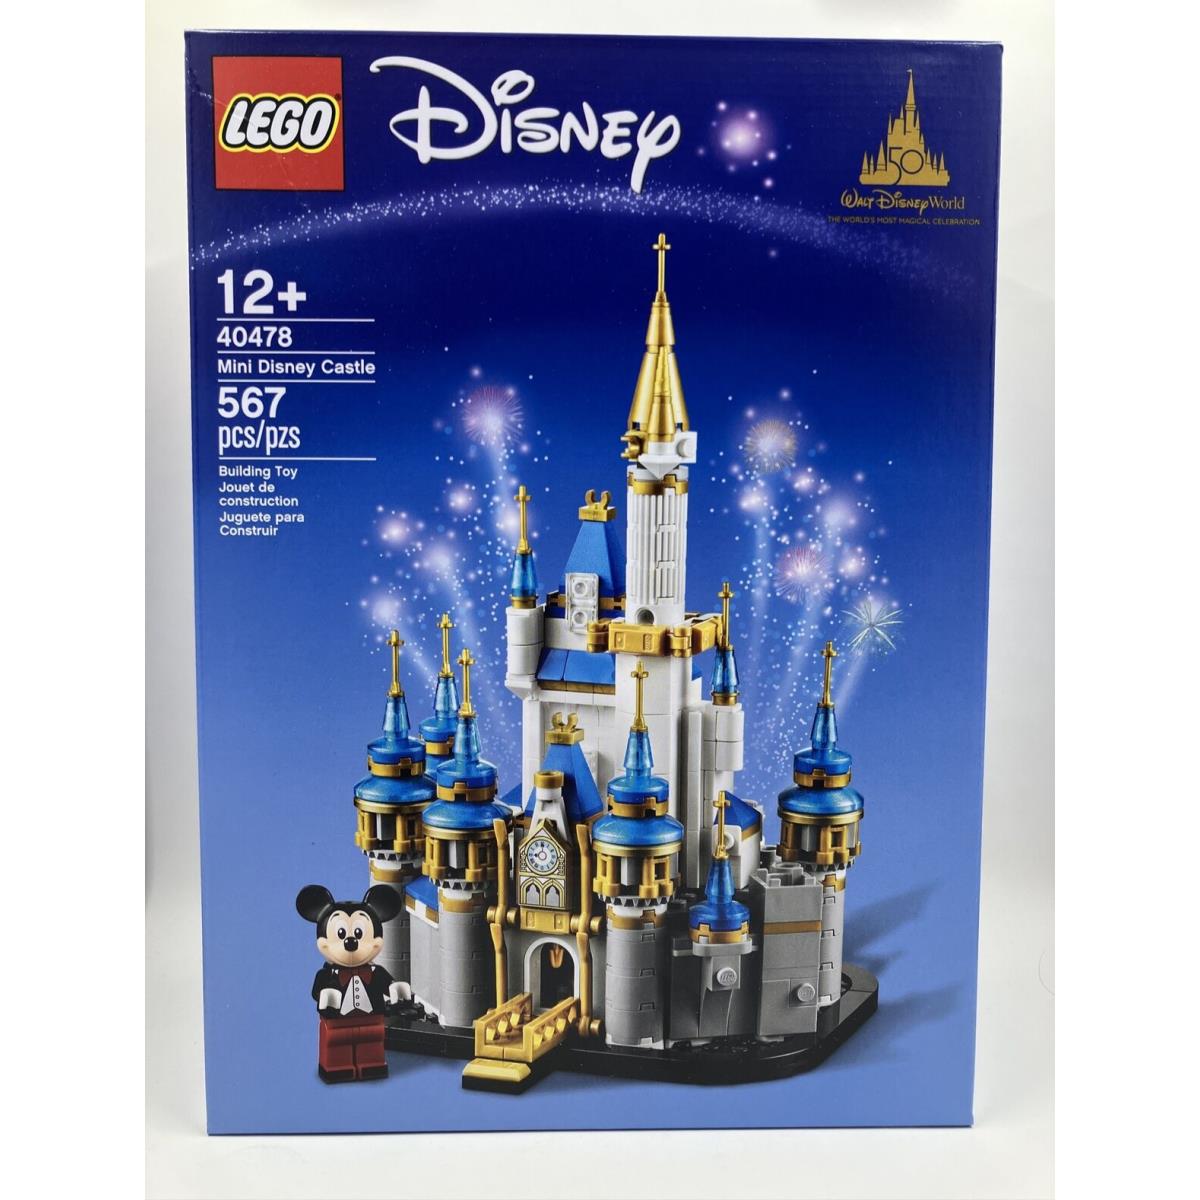 Lego 40478 Mini Disney Castle Disney World 50th Anniversary - 567pcs